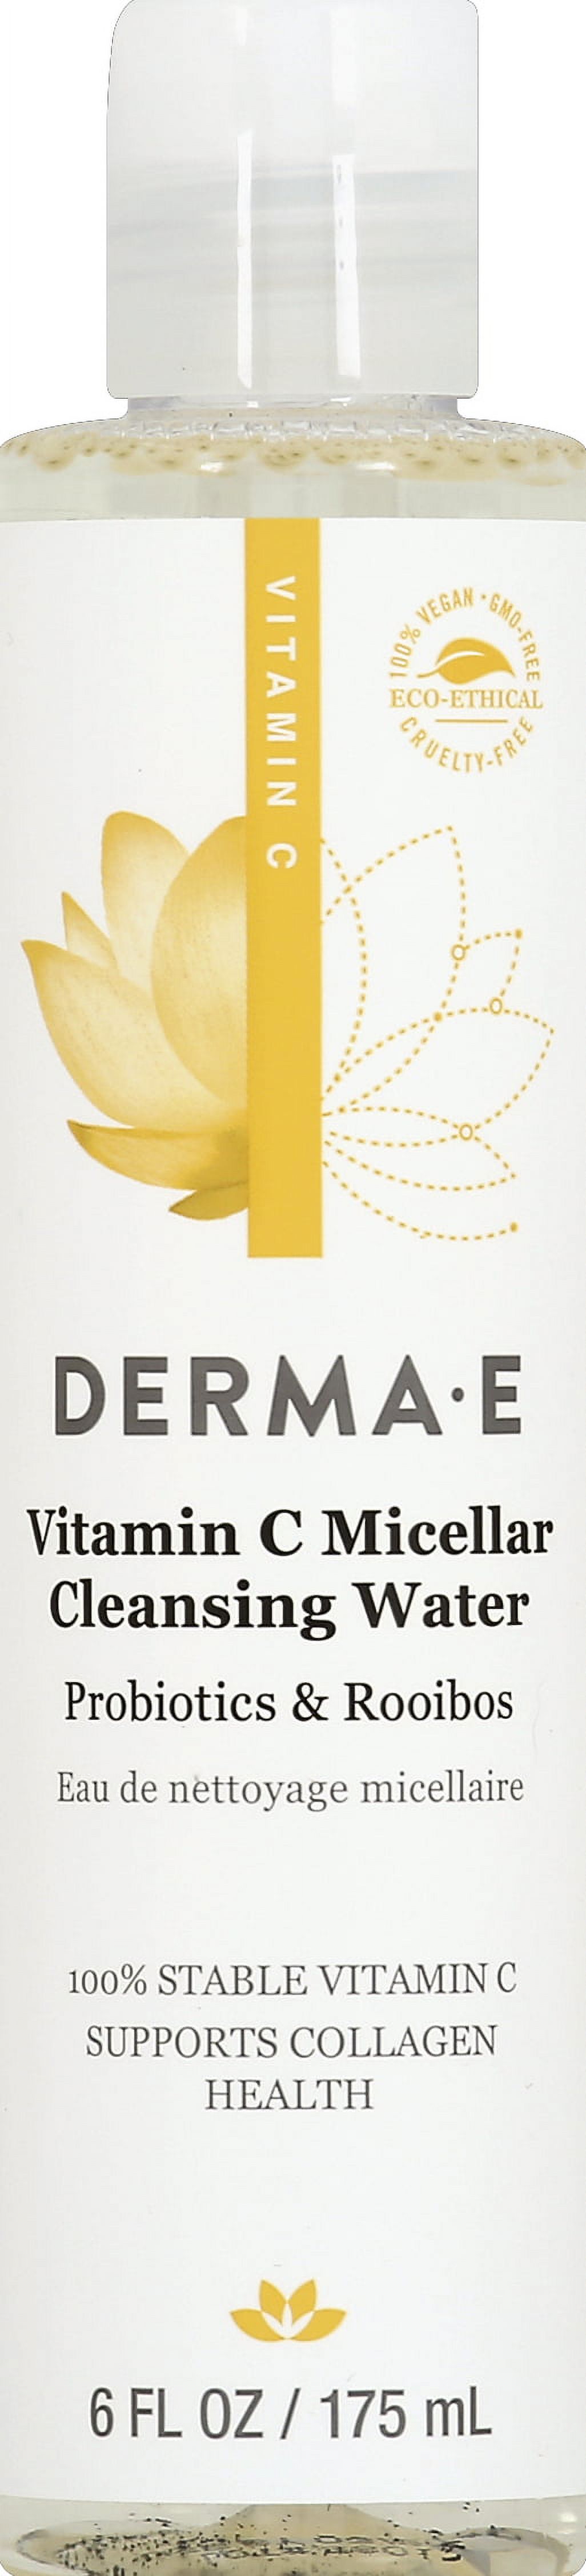 Derma E Vitamin C Micellar Cleansing Water, 6 Fl Oz - image 3 of 3